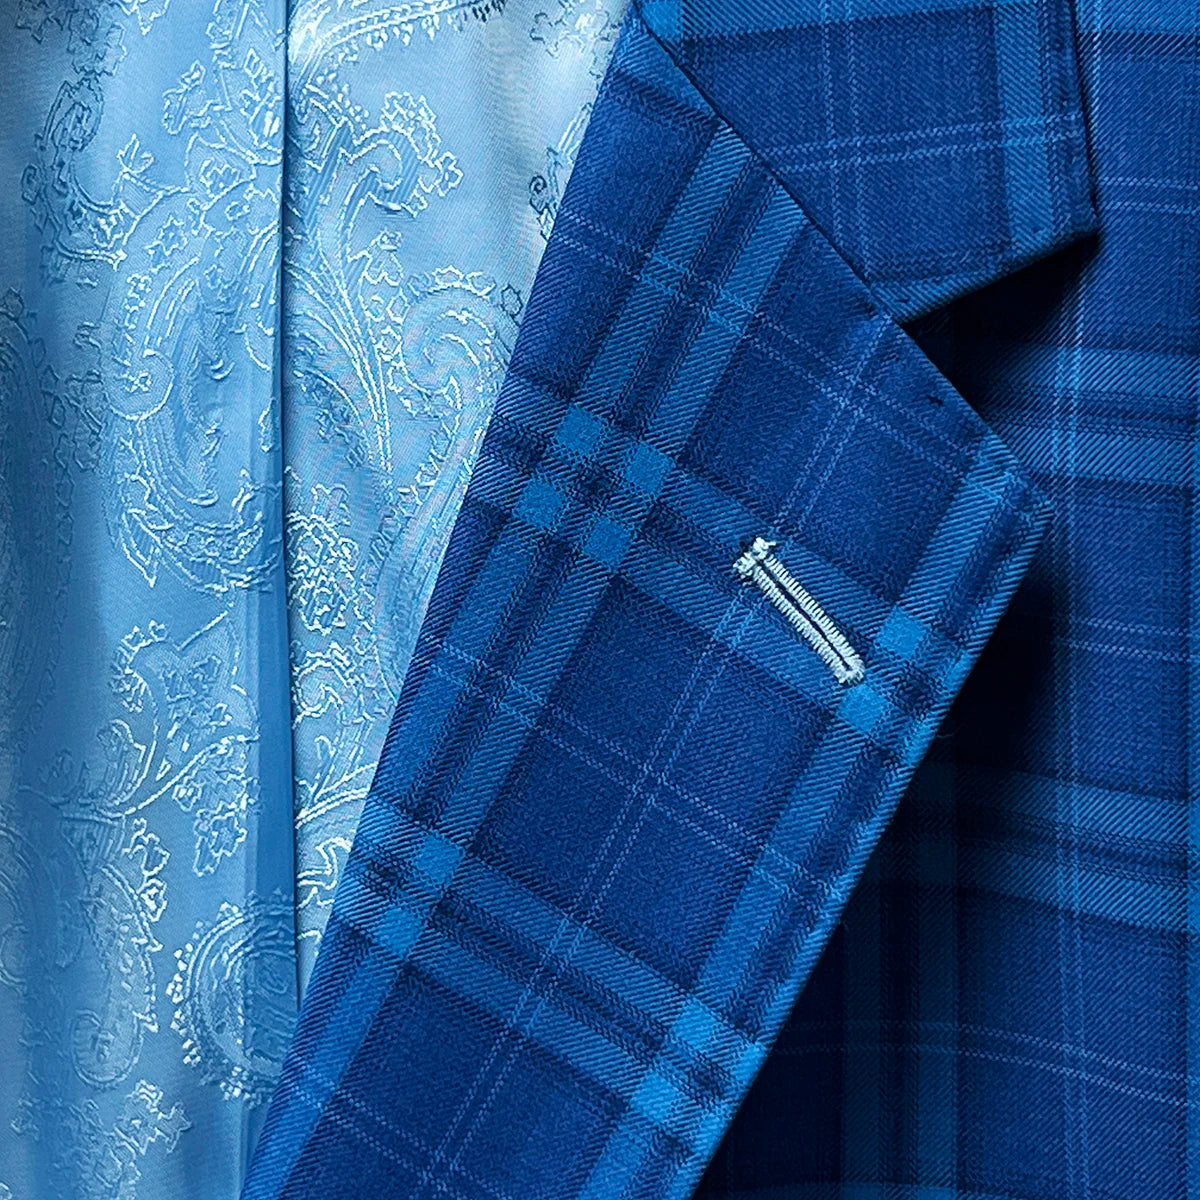 Lapel showcasing tailored precision on a colbalt blue checkered plaid men's sport coat.